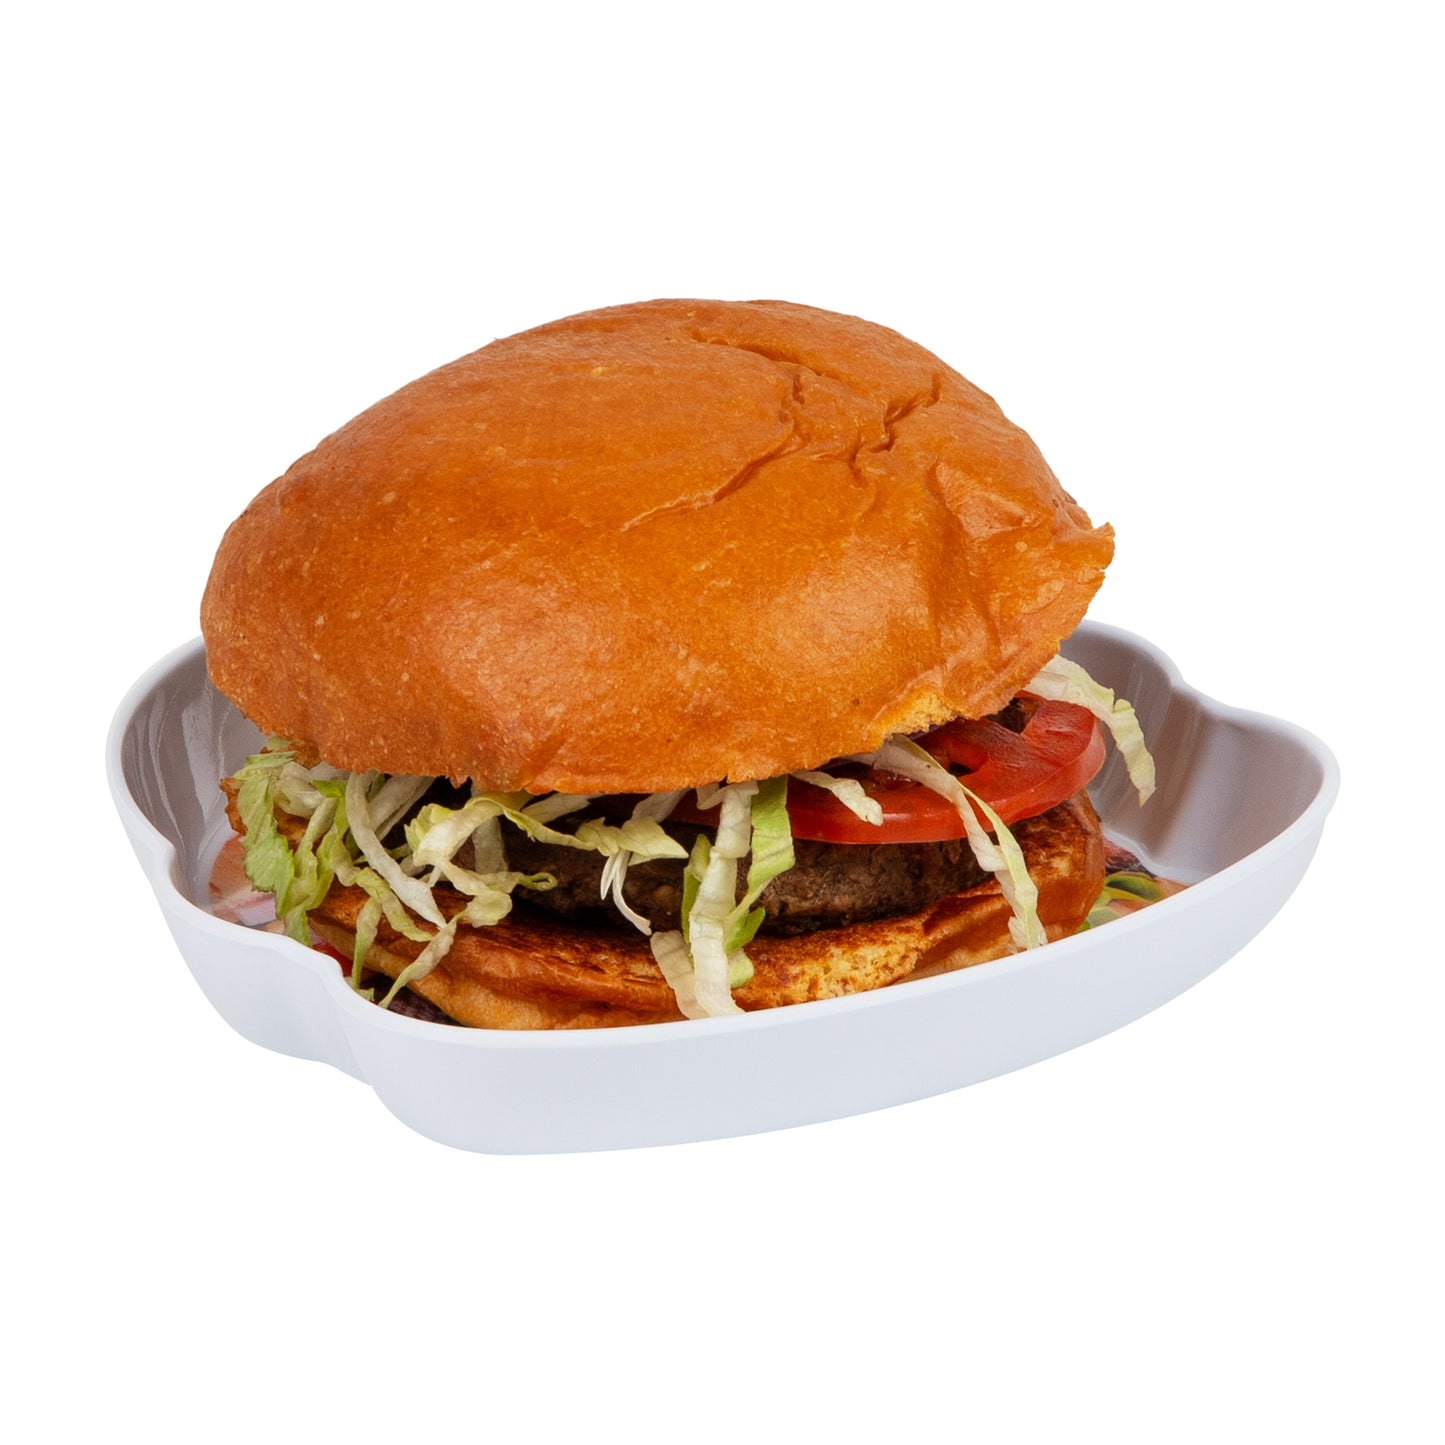 Mind Reader Burger Serving Plate Set, Hosting Essentials, Outdoor Kitchen Accessory, Melamine, 7"L x 7"W x 1"H, 4 pcs, White